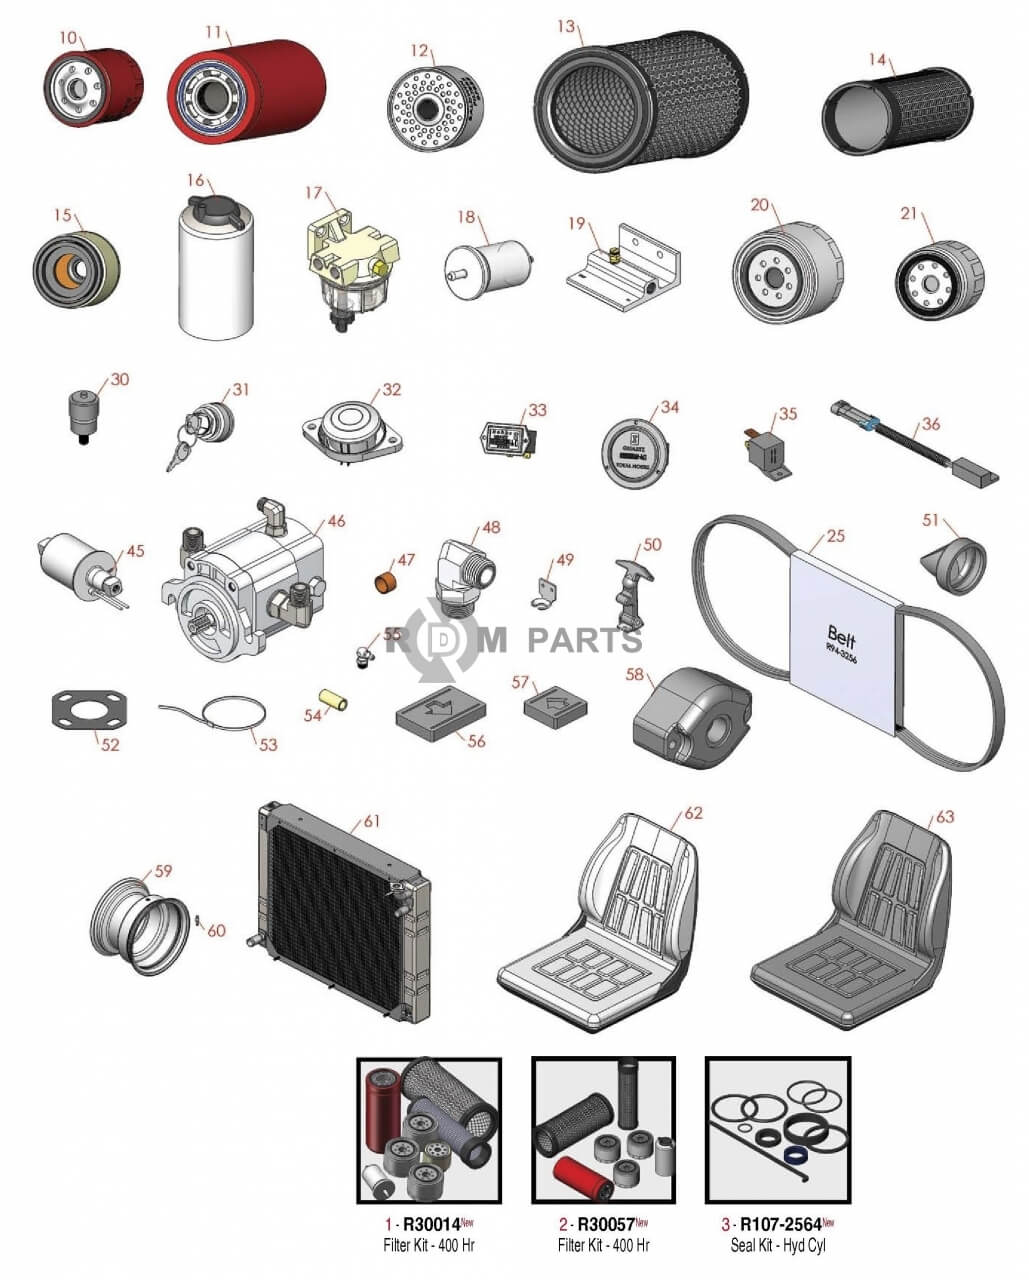 Replacement parts for RM 6500D & 6700D Traction unit